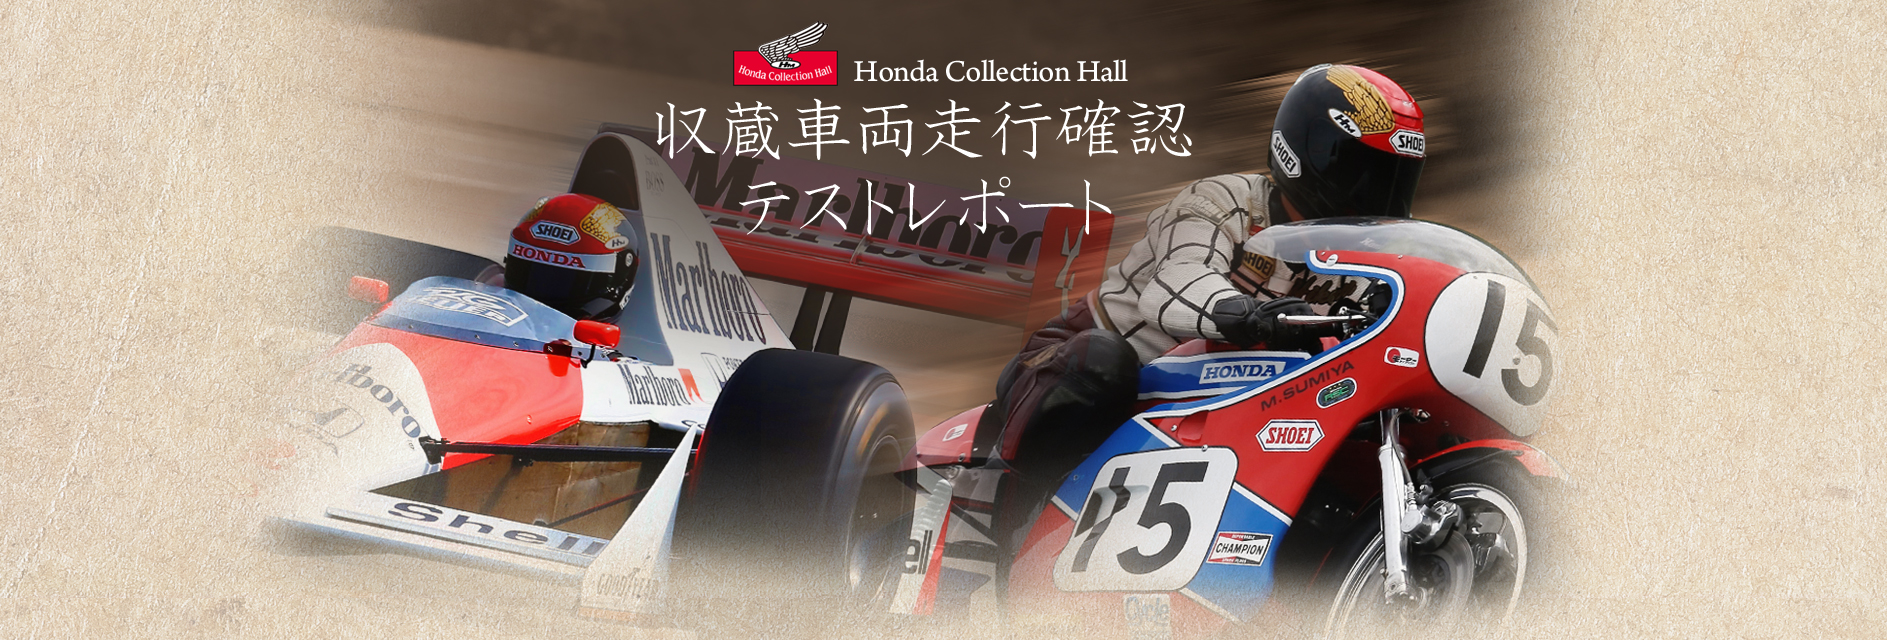 Honda Collection HallԗsmFeXg|[g